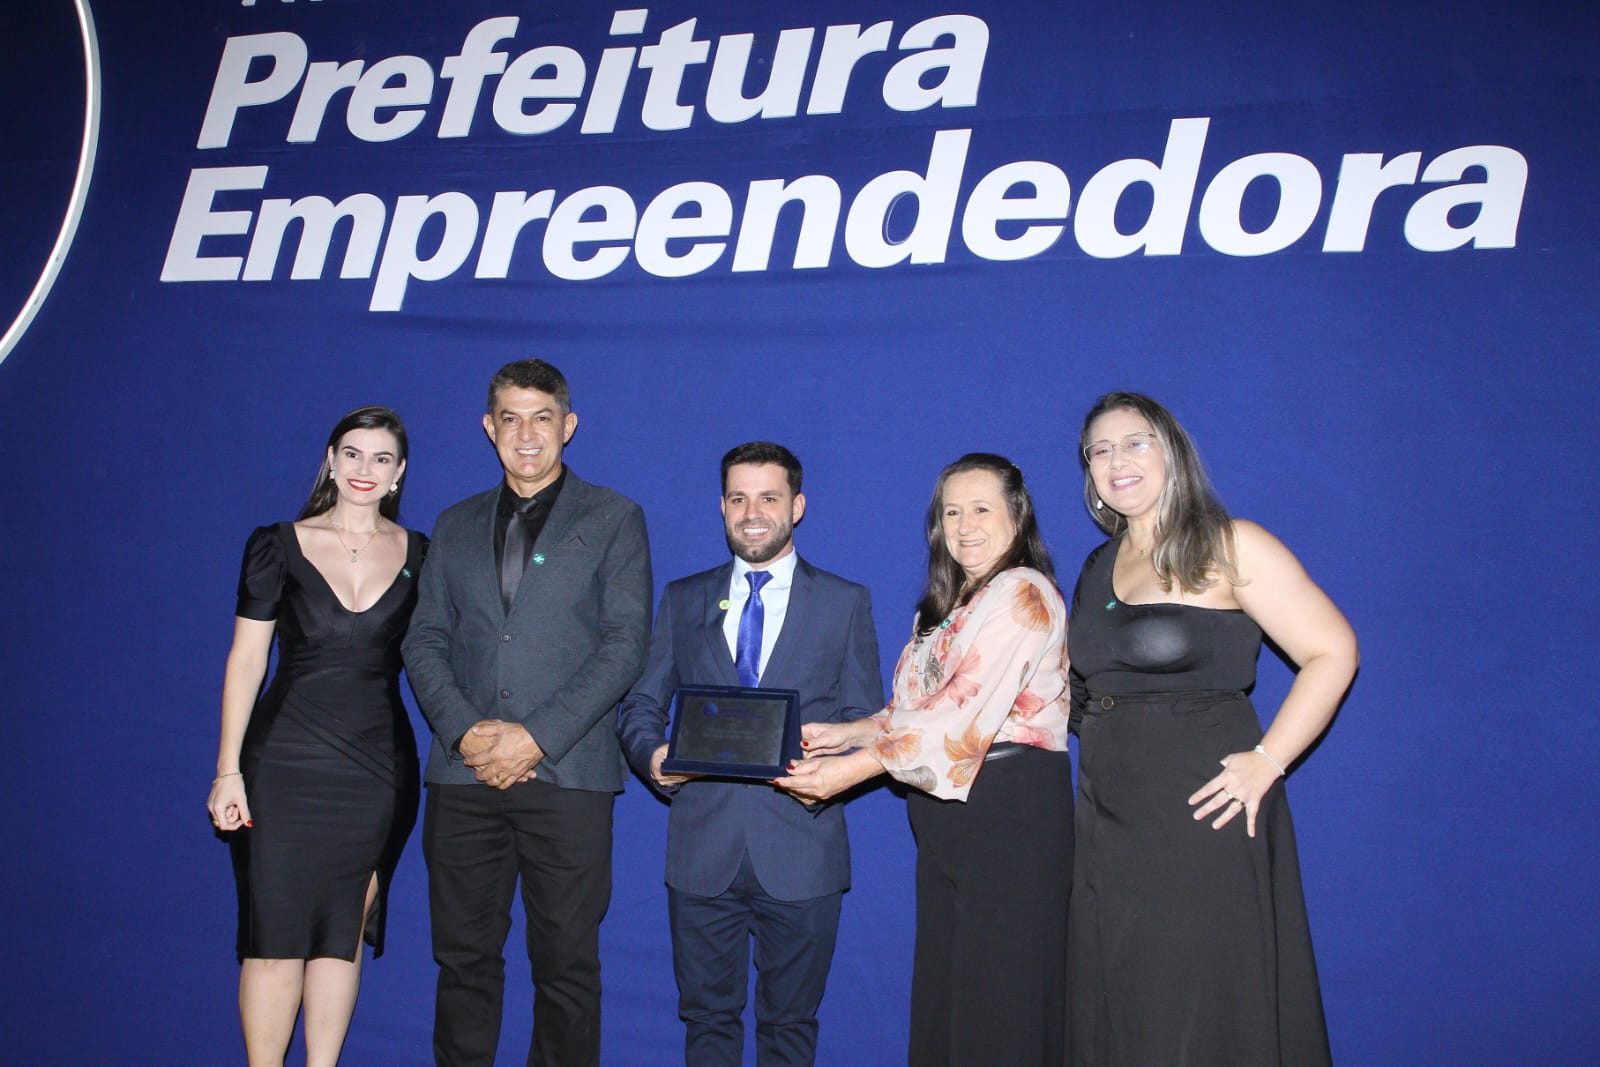 Prefeitura Empreendedora - Final Nacional do II Prêmio SEBRAE 